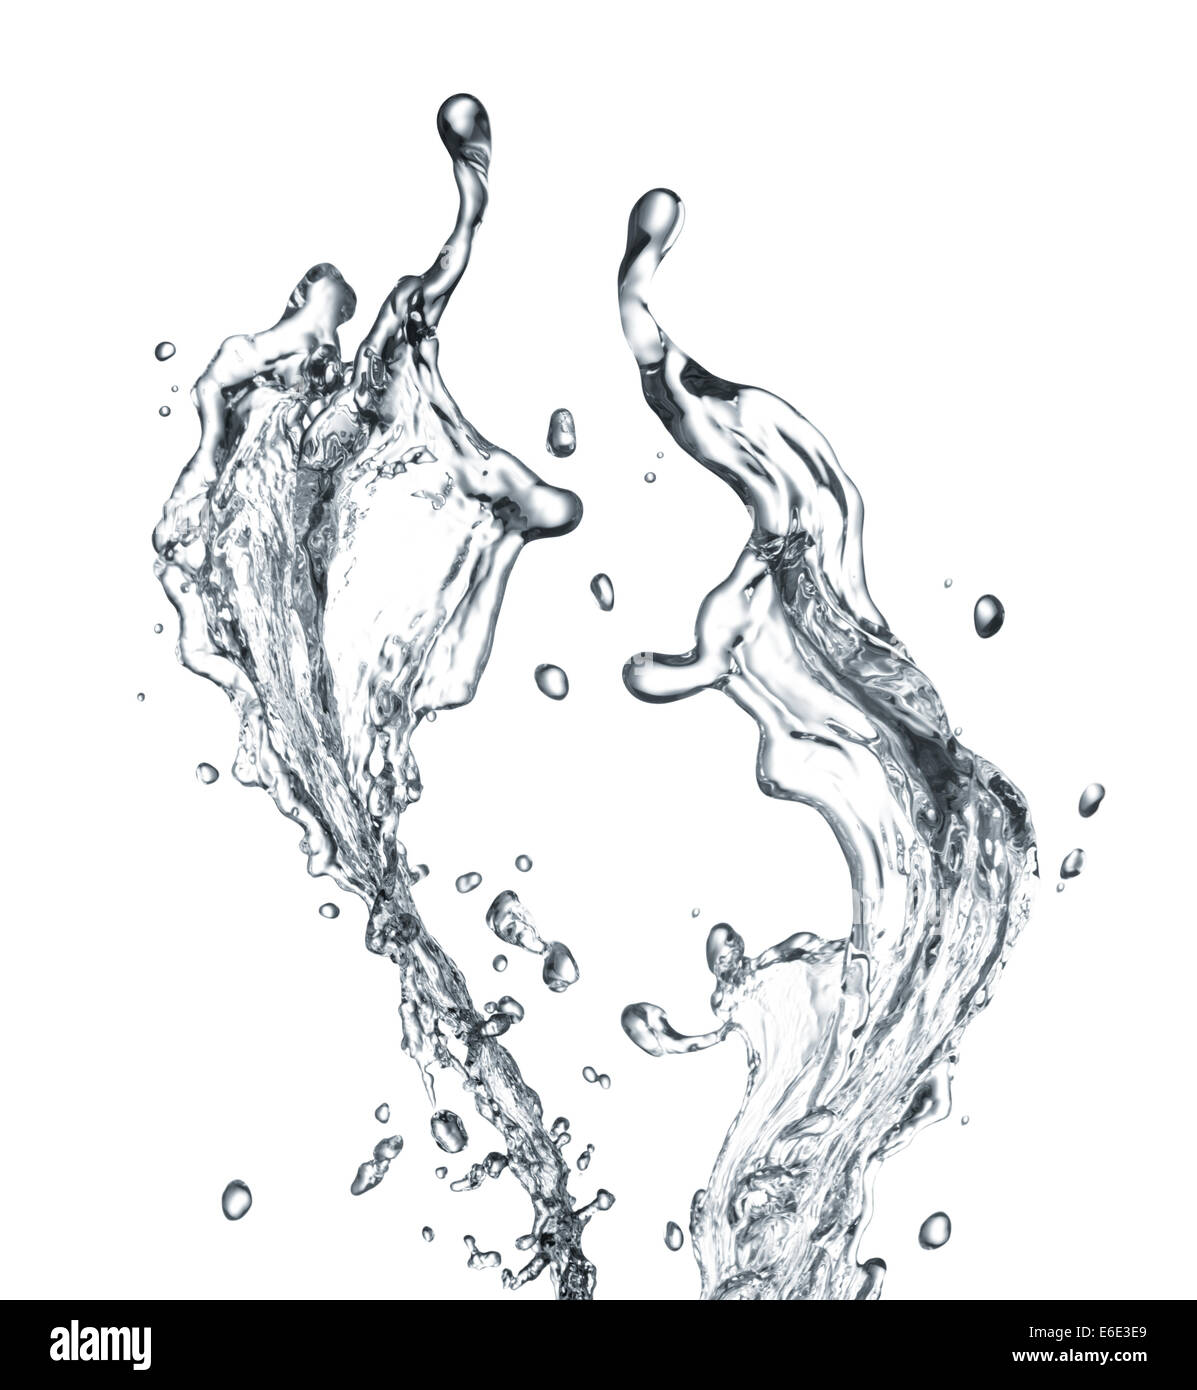 water or liquid splash against white background Stock Photo